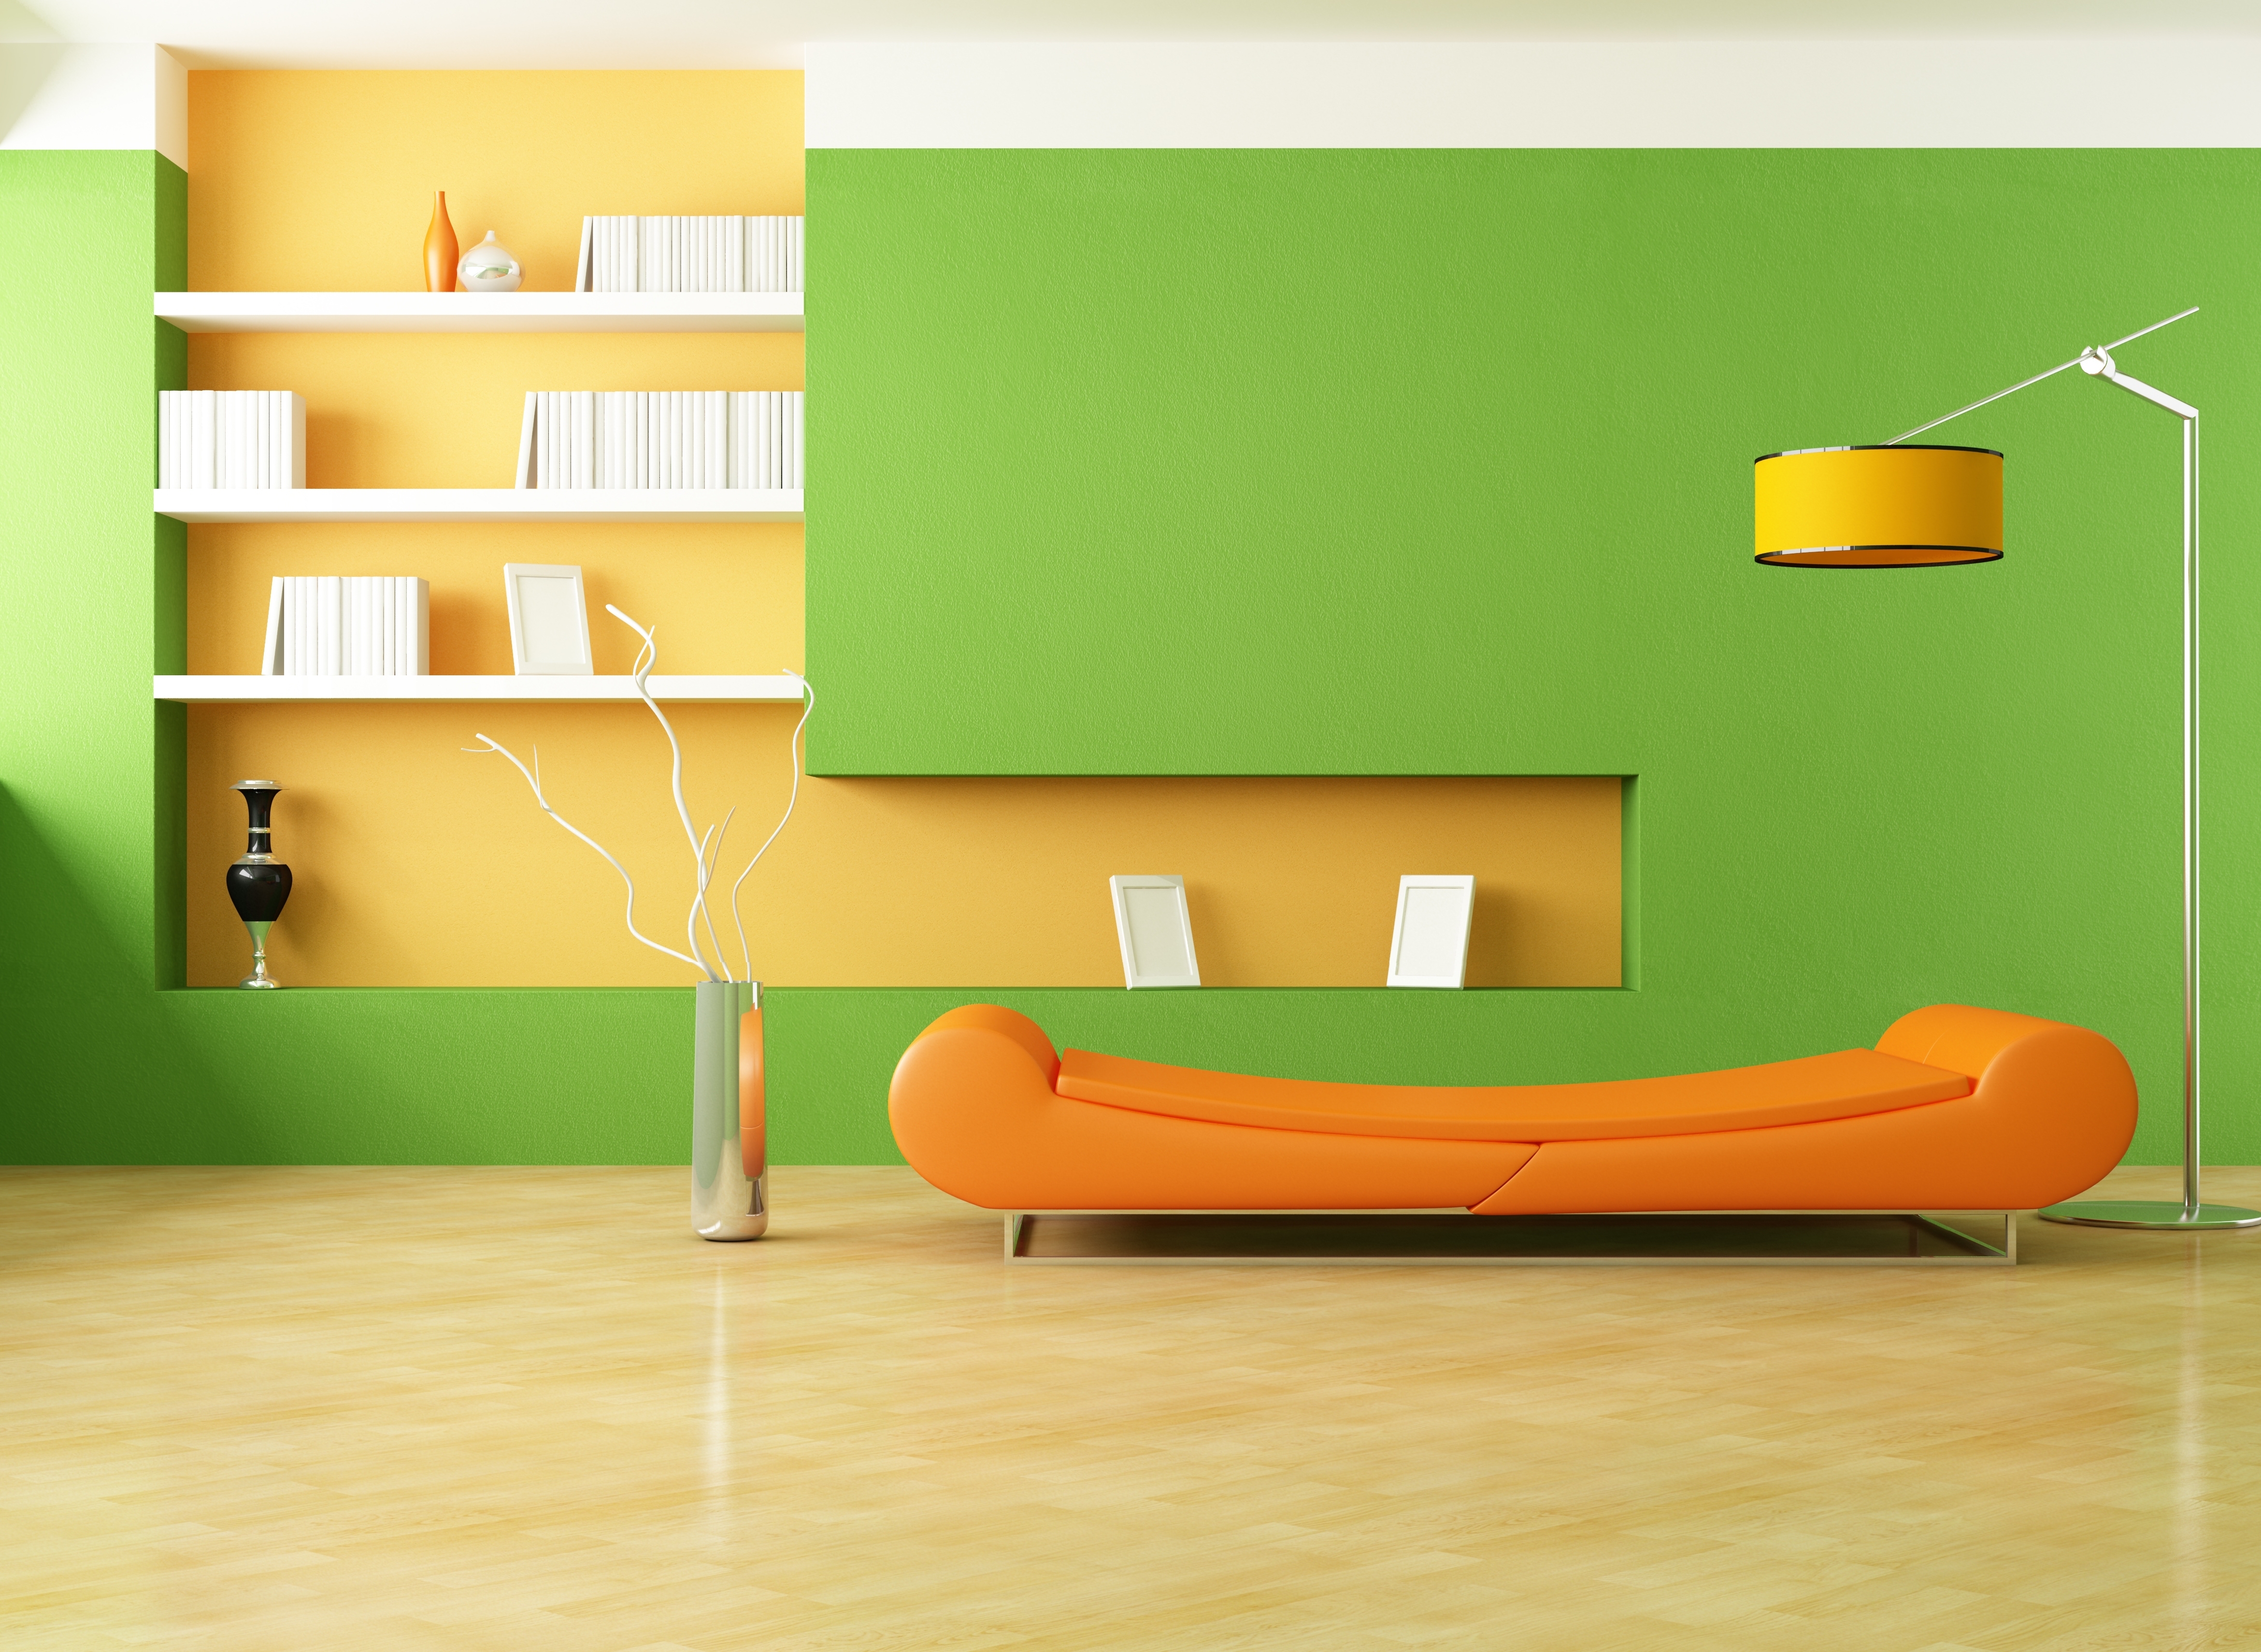 minimalism, room, orange, interior, miscellanea, miscellaneous, design, lamp, style, sofa, vases